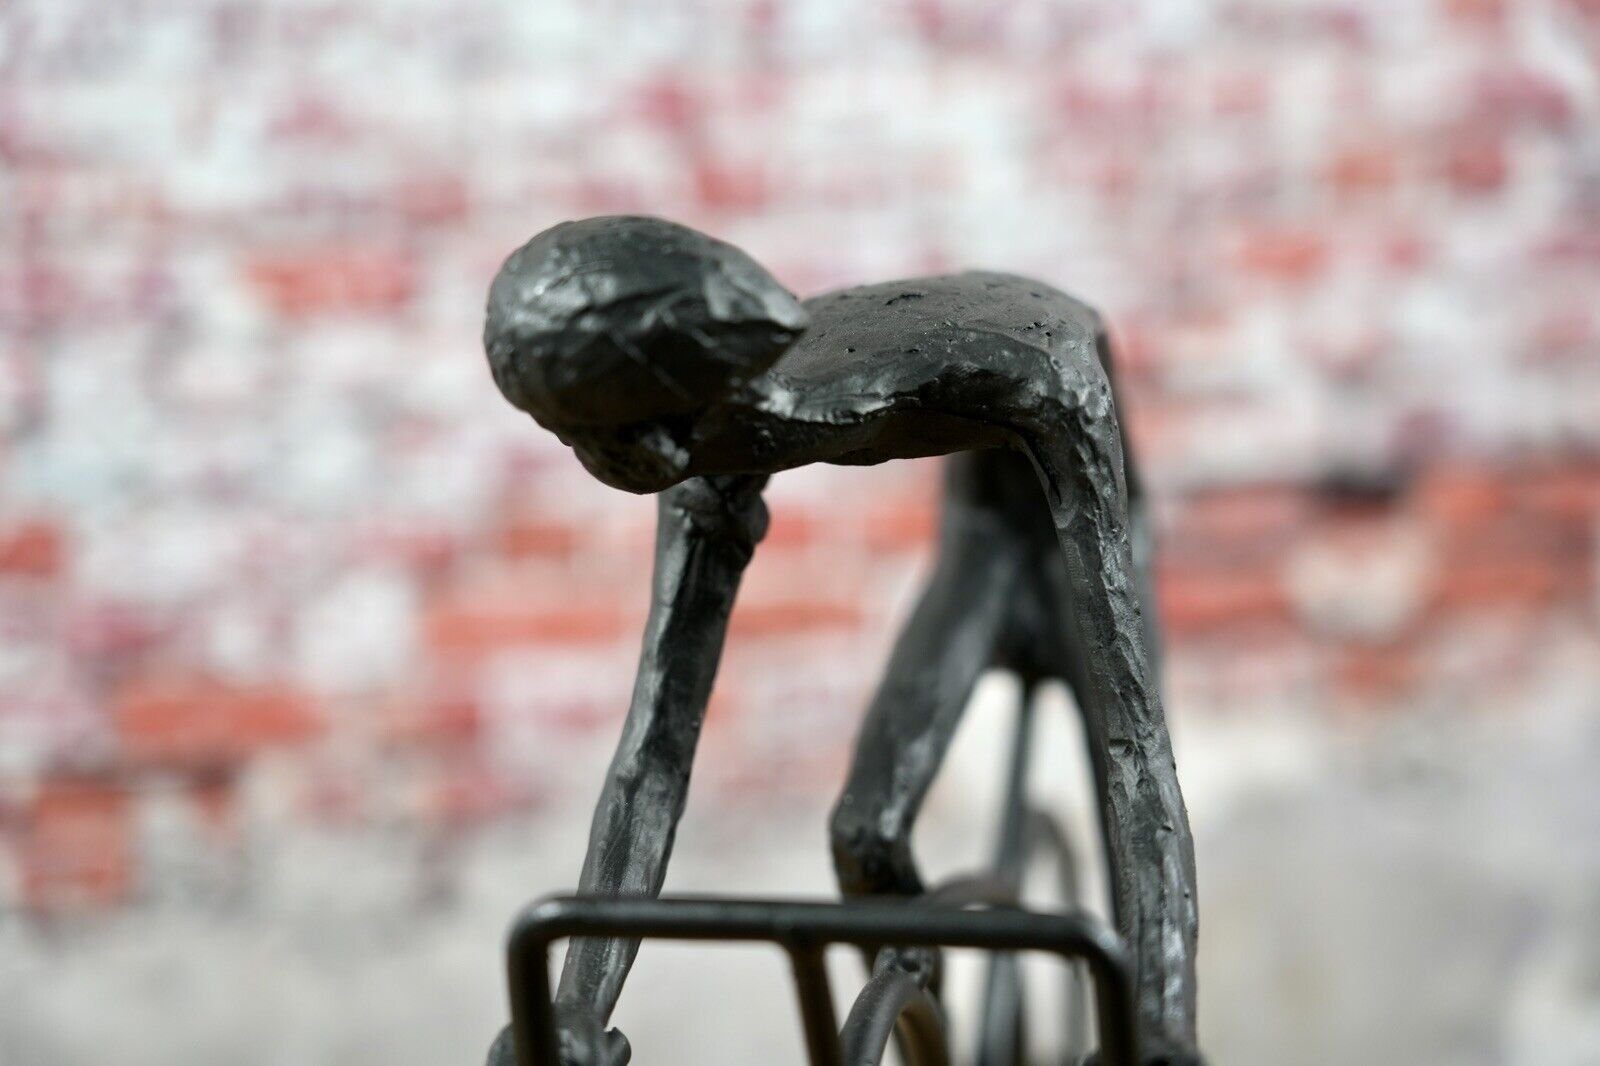 MF Skulptur 6-er Radfahrer Dekofiguren Set Fahrrad (6 St) - Handgefertigte